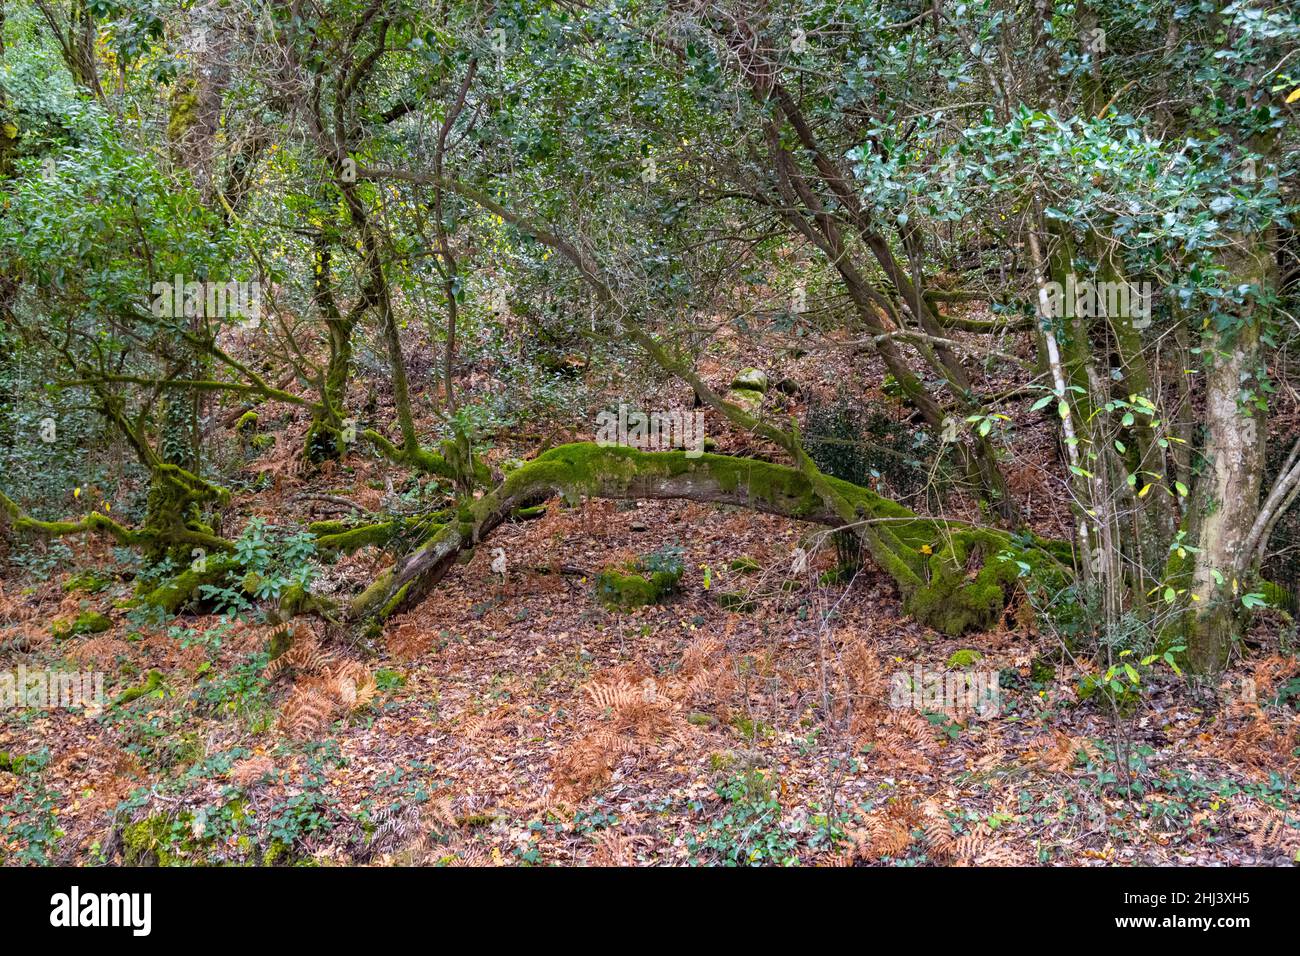 Fallender Baum lebendig in den Wäldern. Tiefe Wälder, Wildnis Landschaft im Herbst. Stockfoto